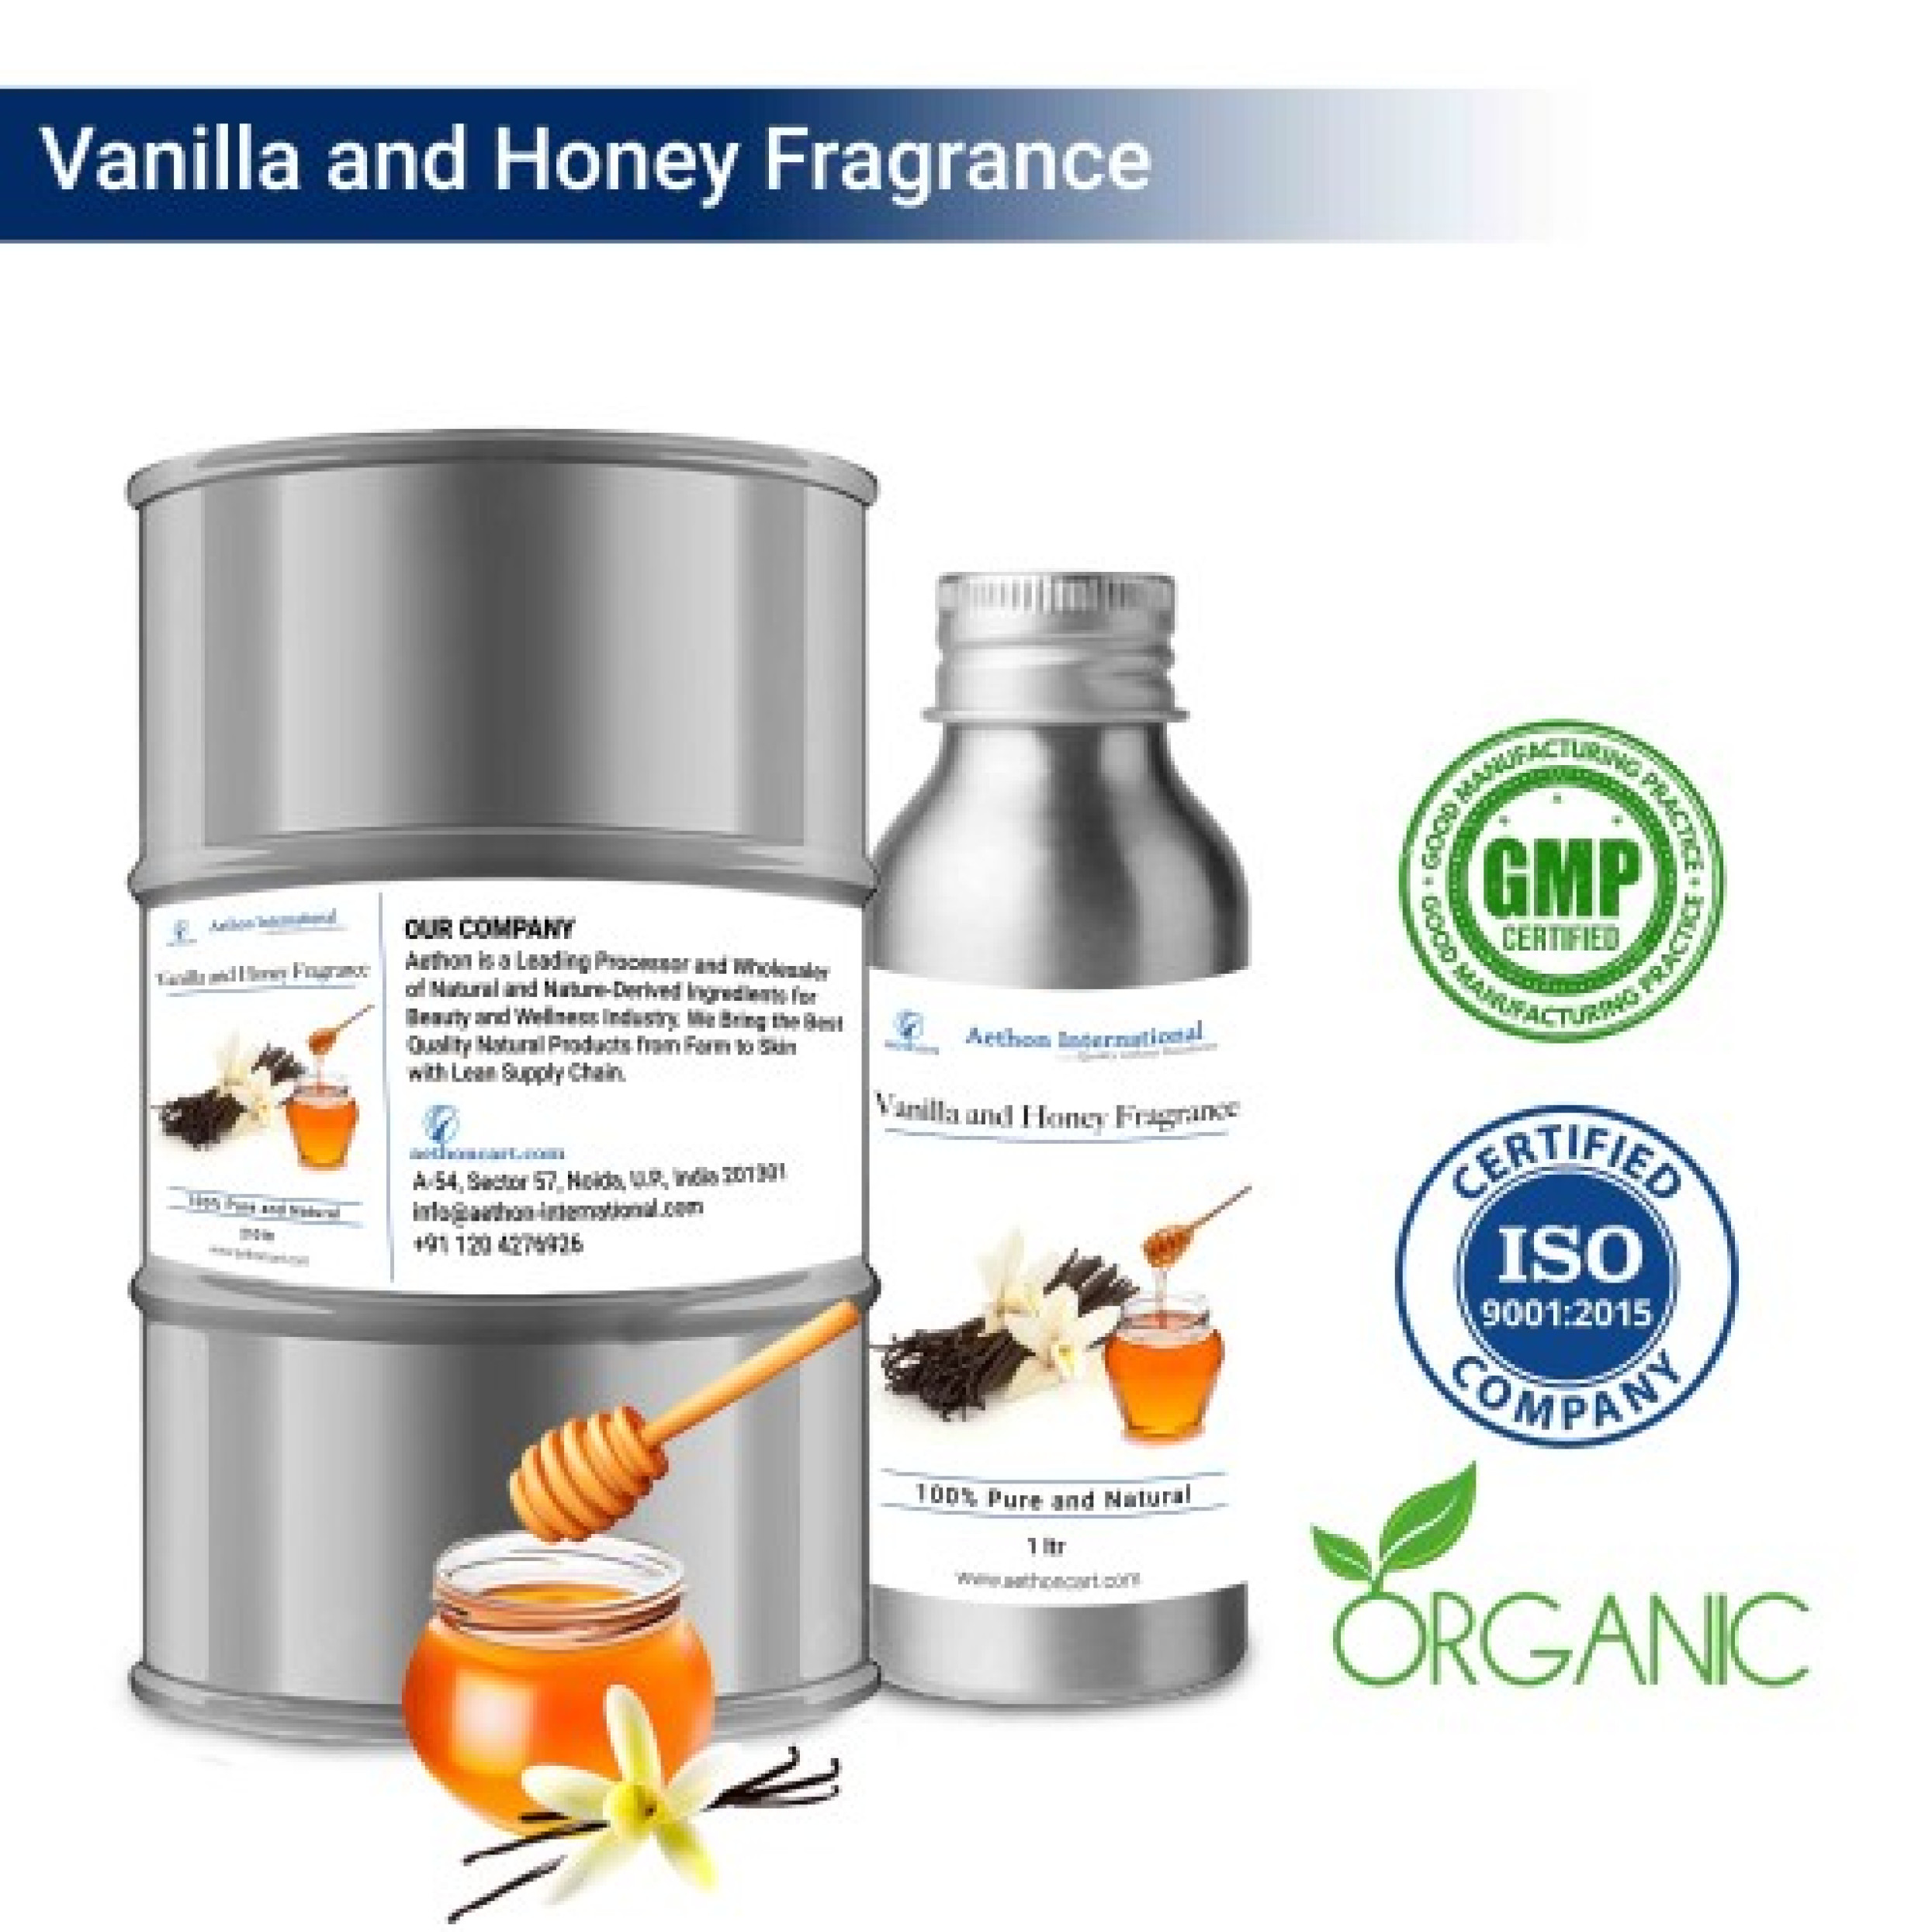 Vanilla and Honey Fragrance